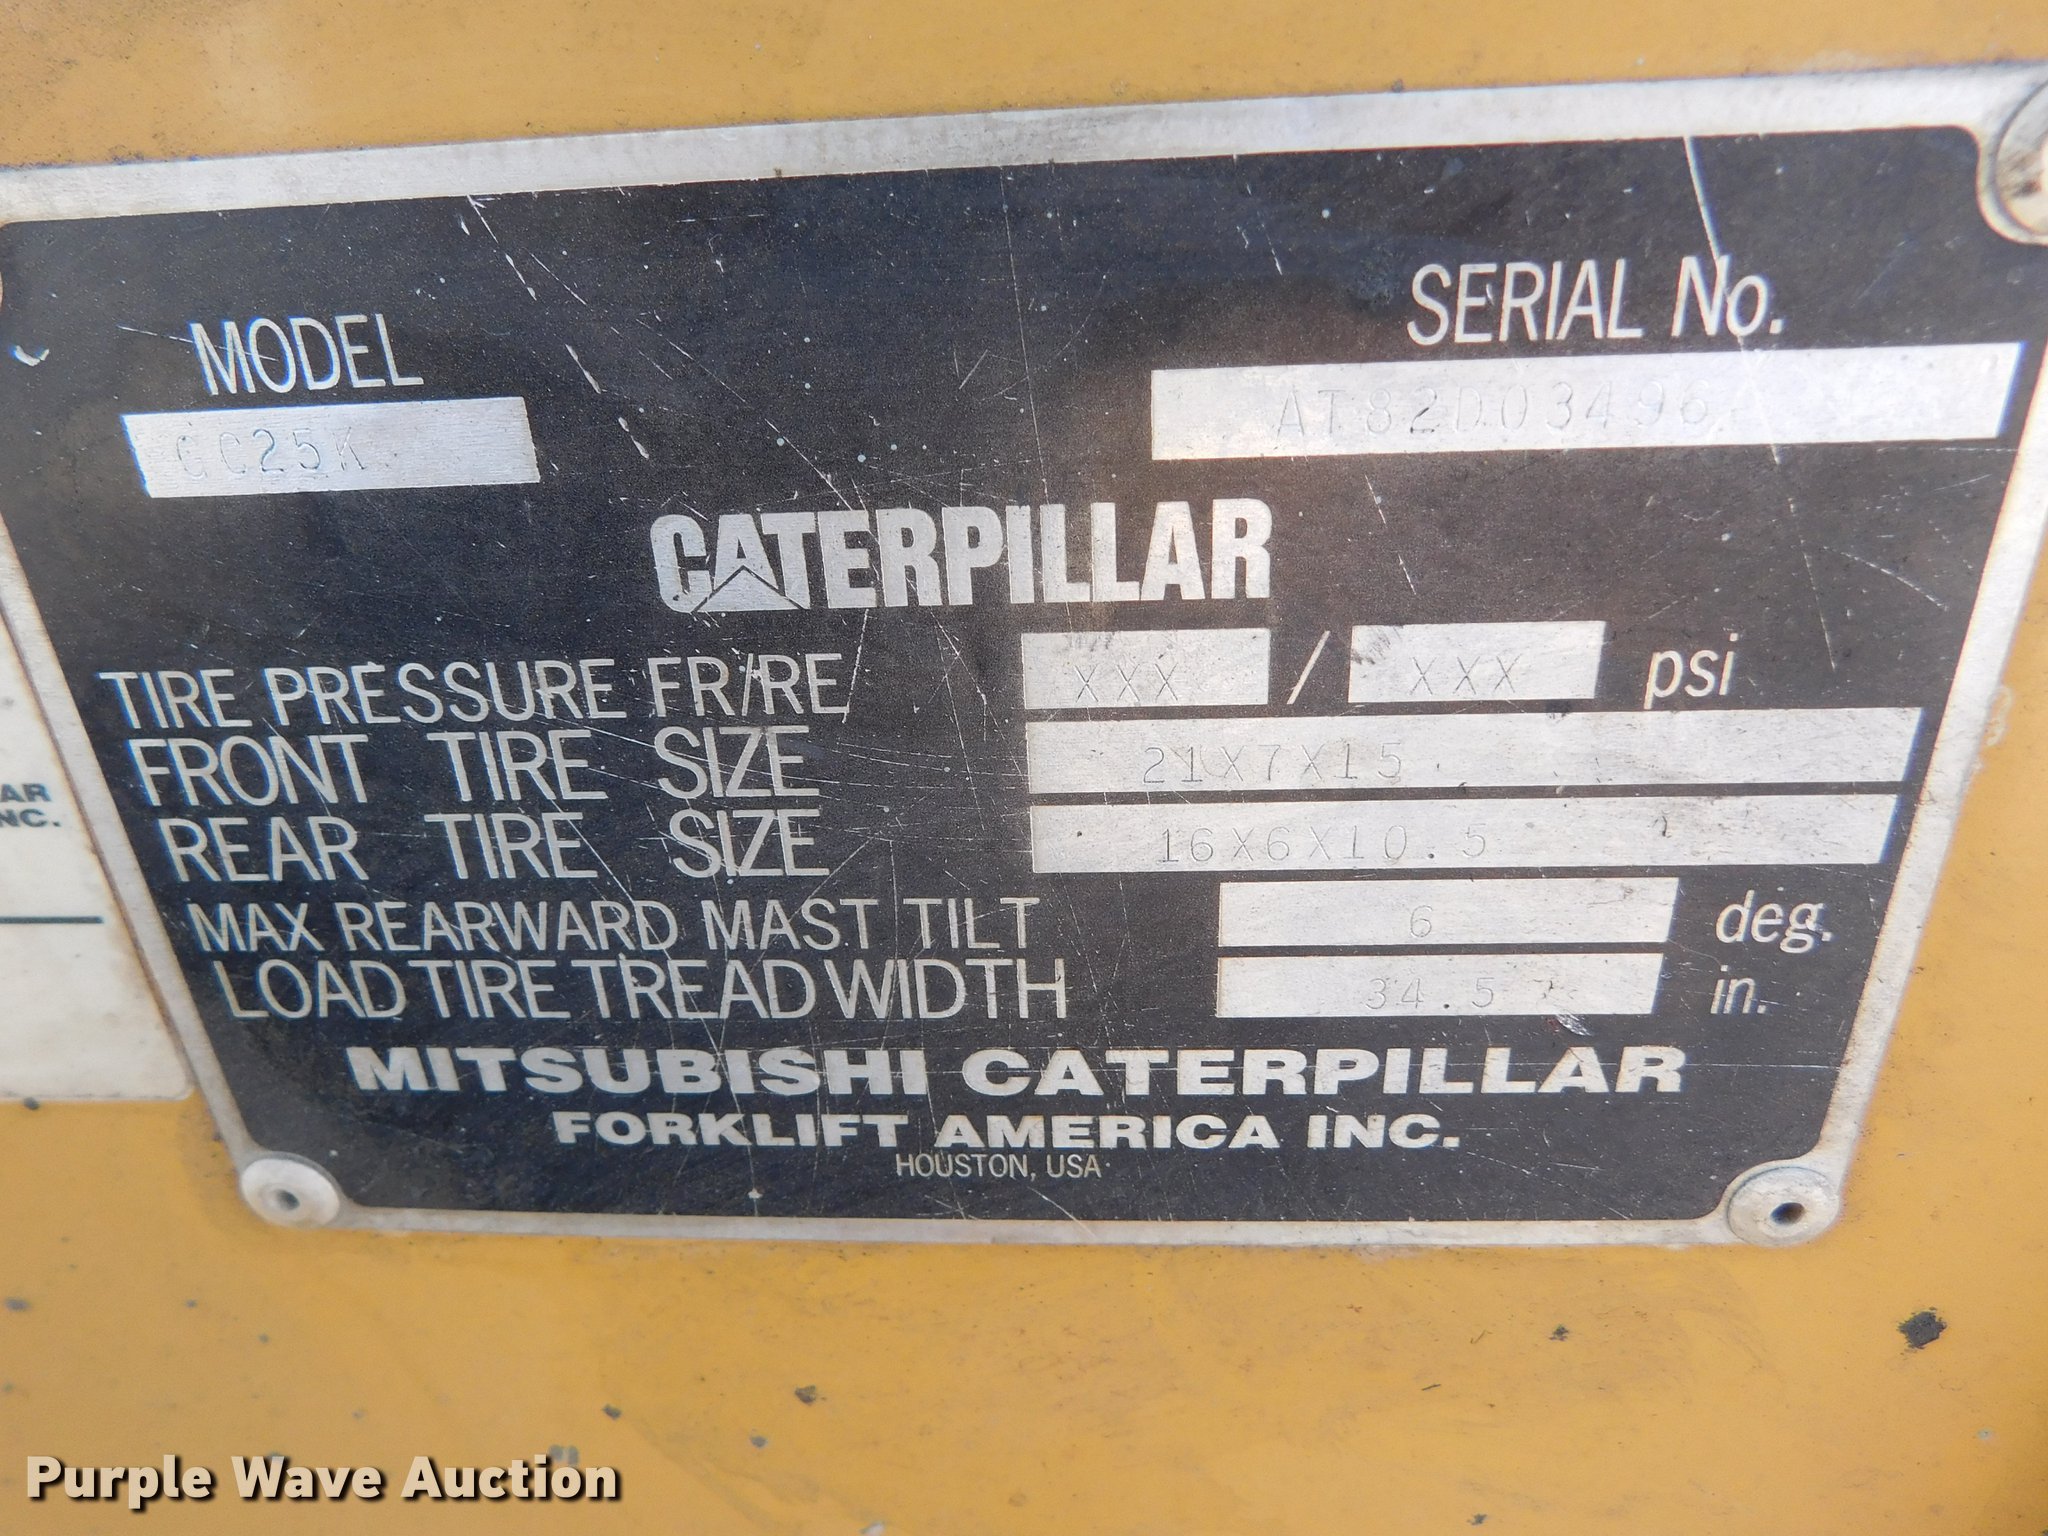 Caterpillar engine manufacturing date